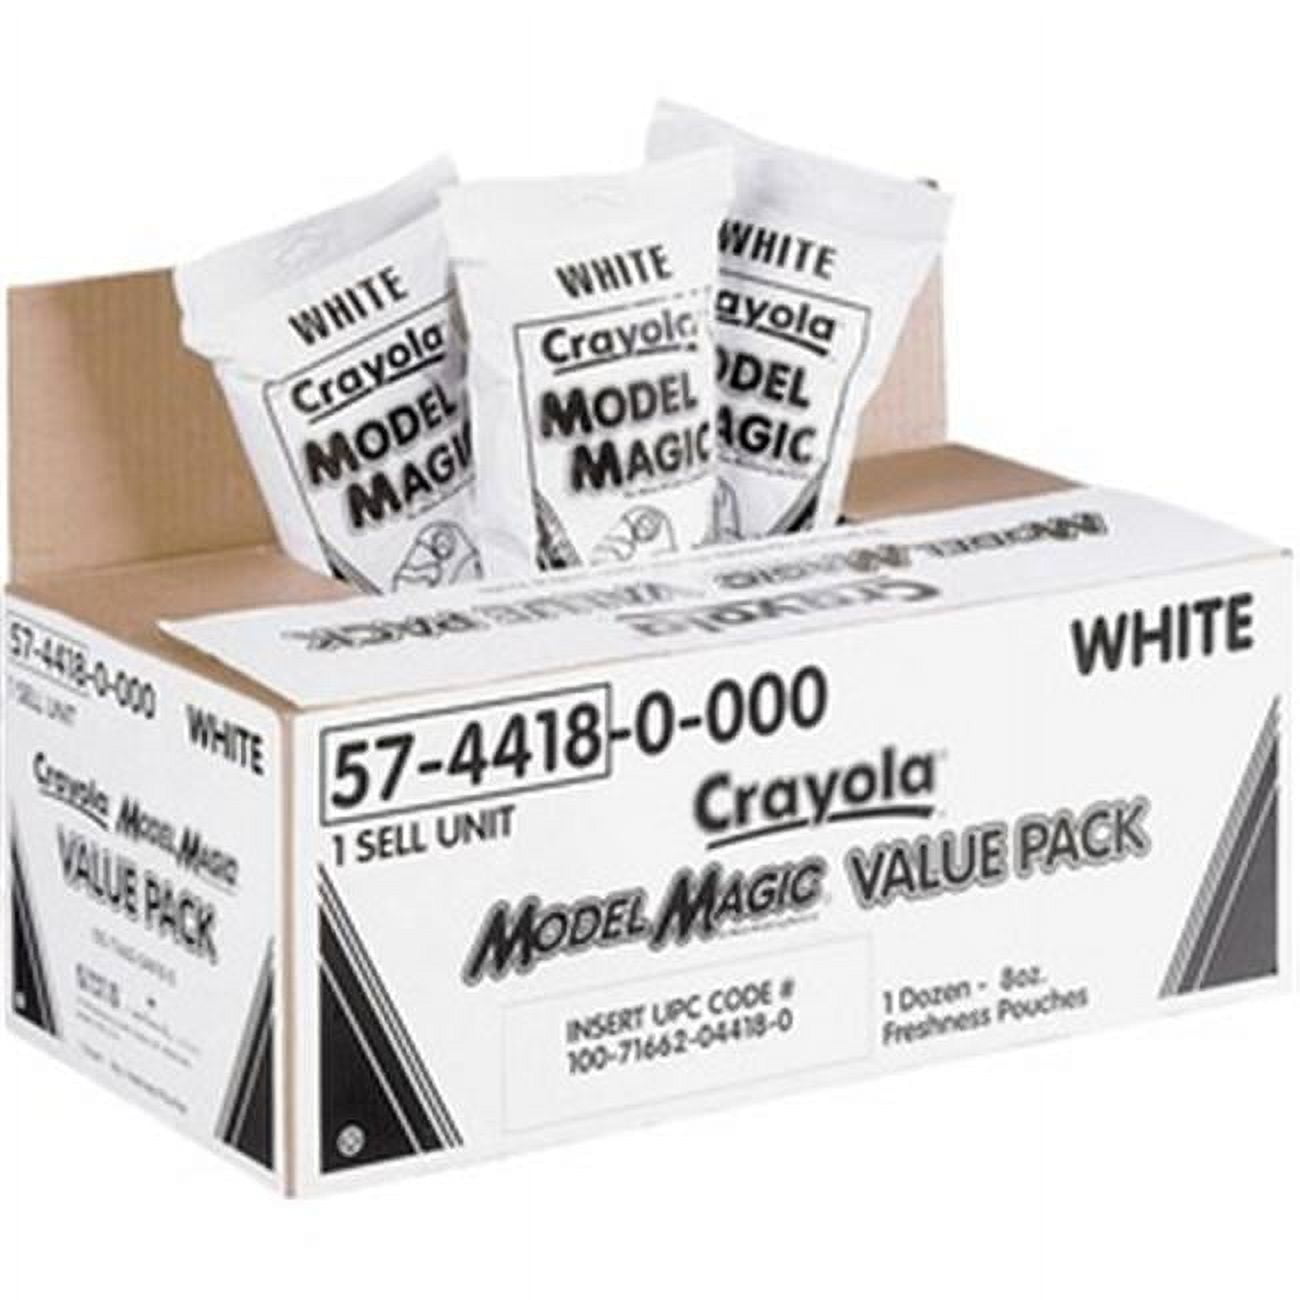 Crayola Model Magic Modeling Compound, Green, 4 oz. Packs, 6 Packs | BIN4444-6